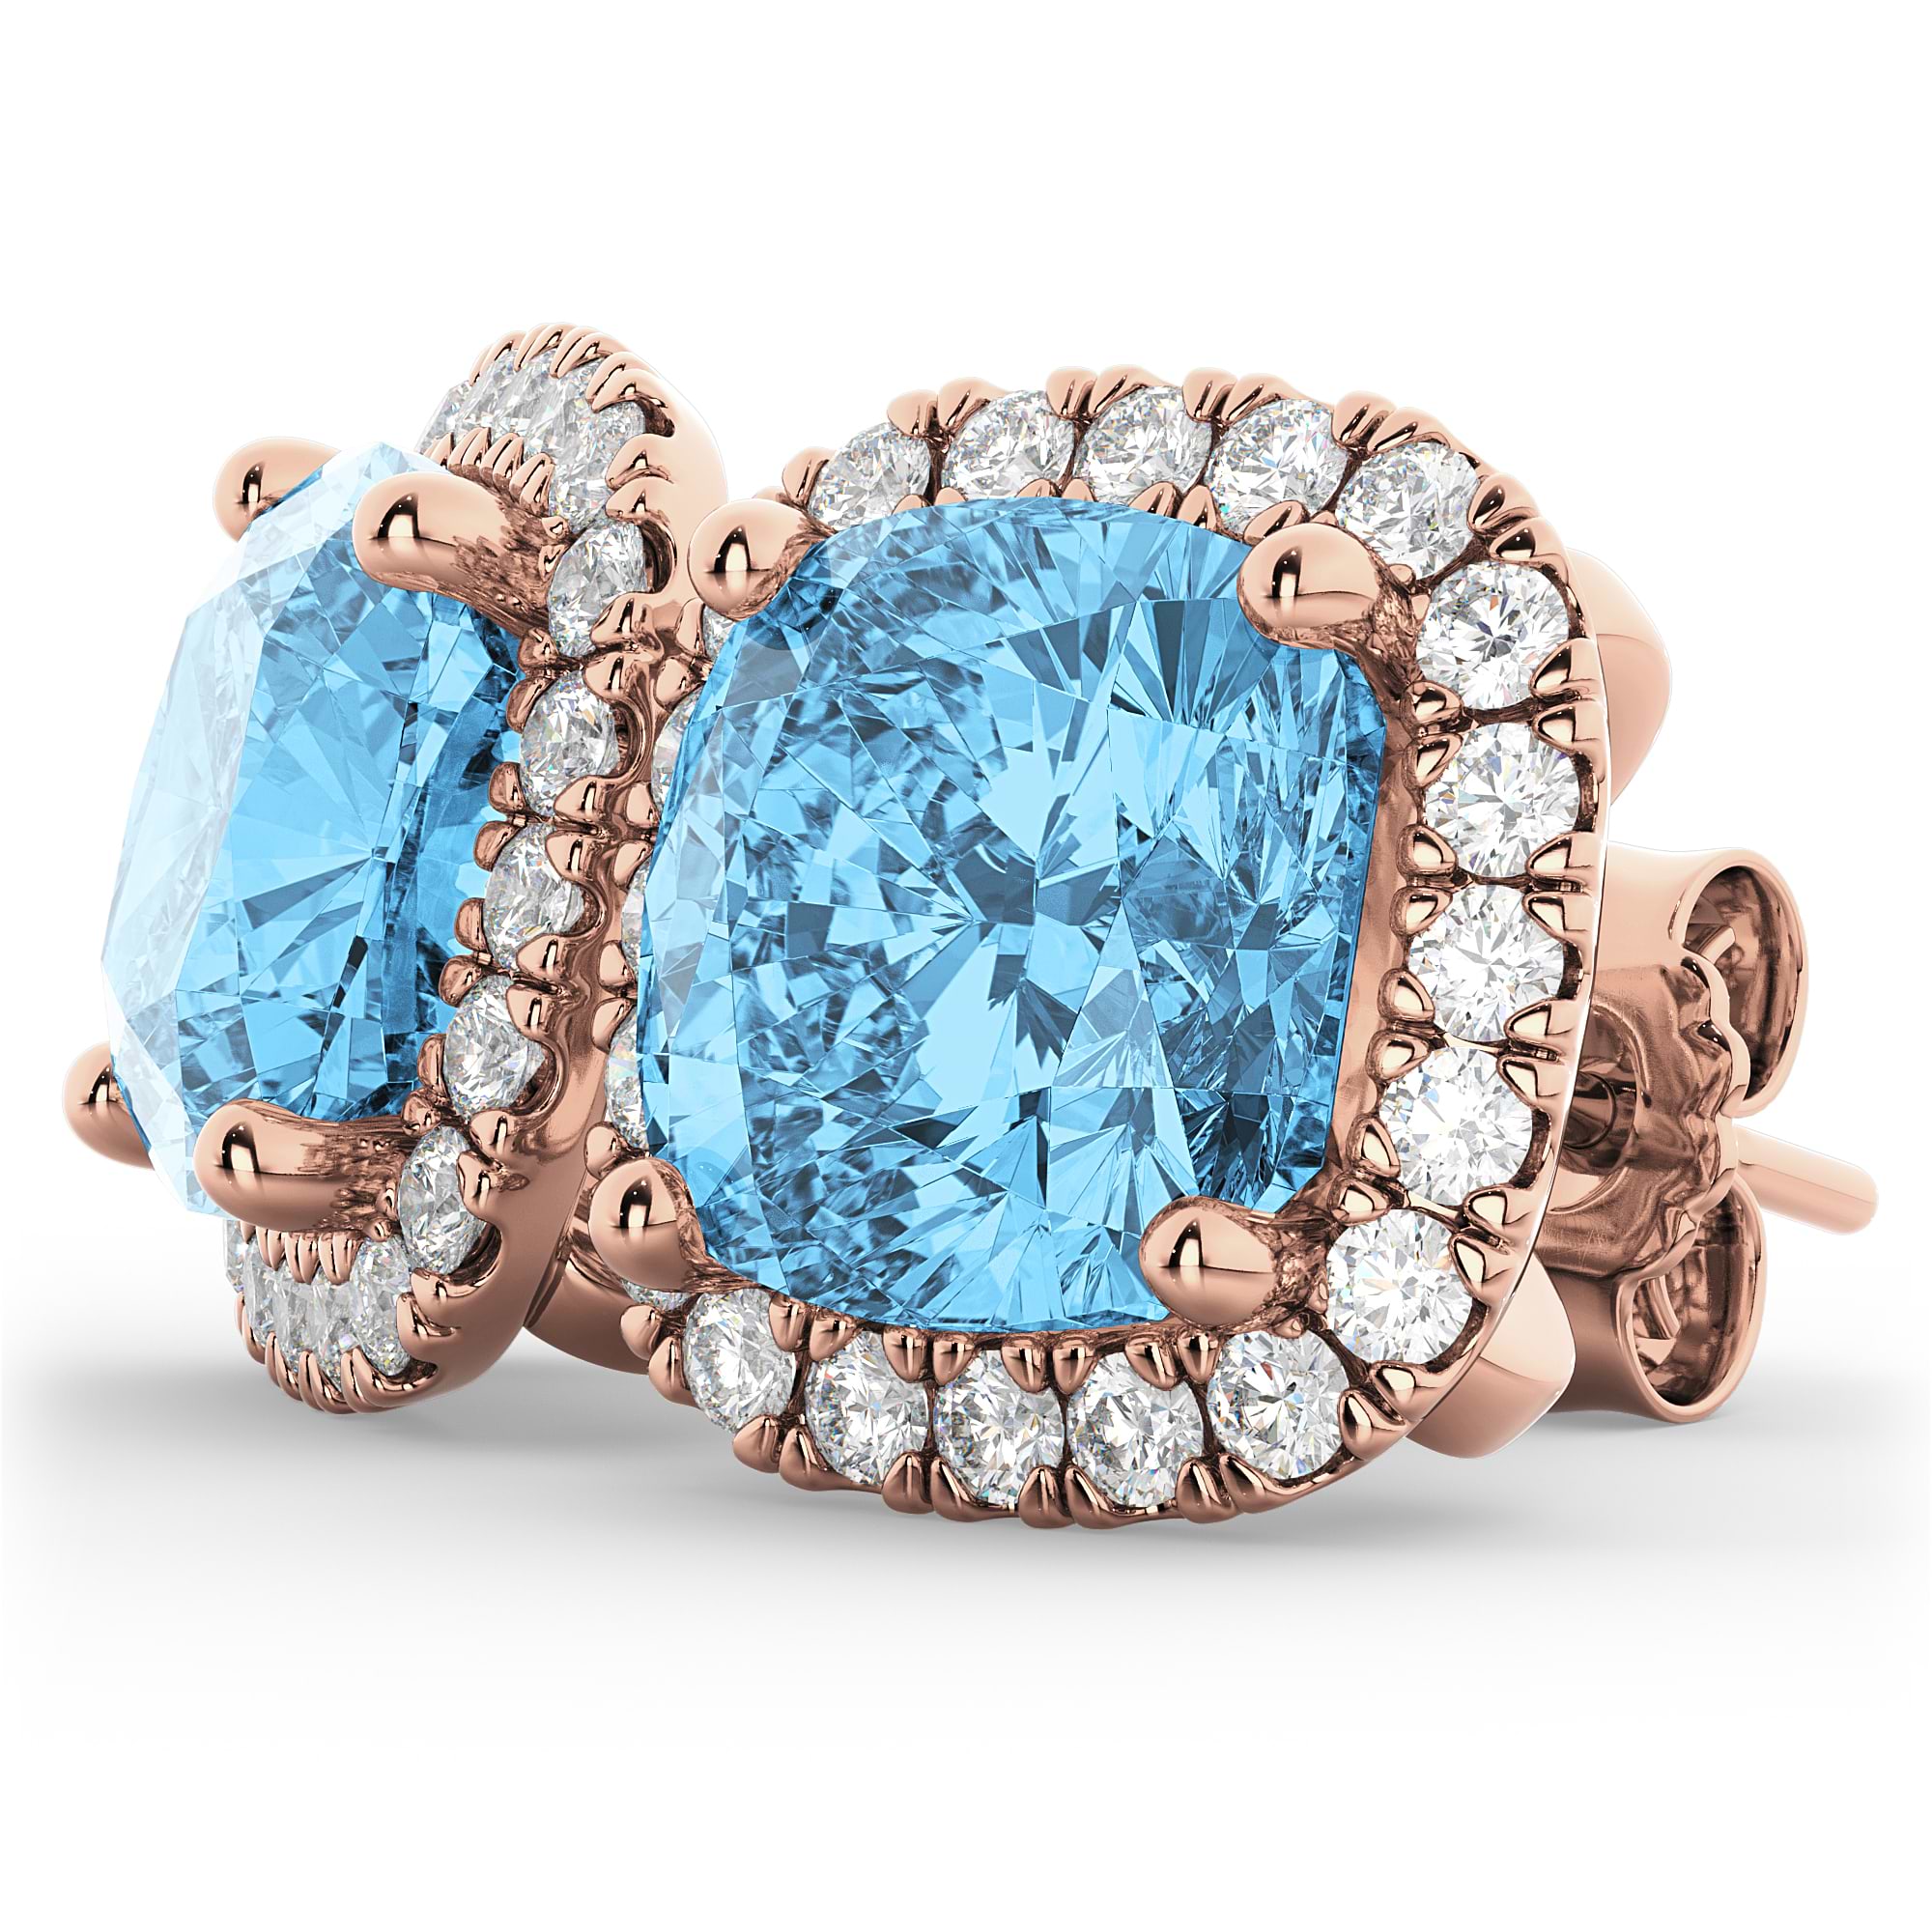 Halo Cushion Blue Topaz & Diamond Earrings 14k Rose Gold (4.04ct)